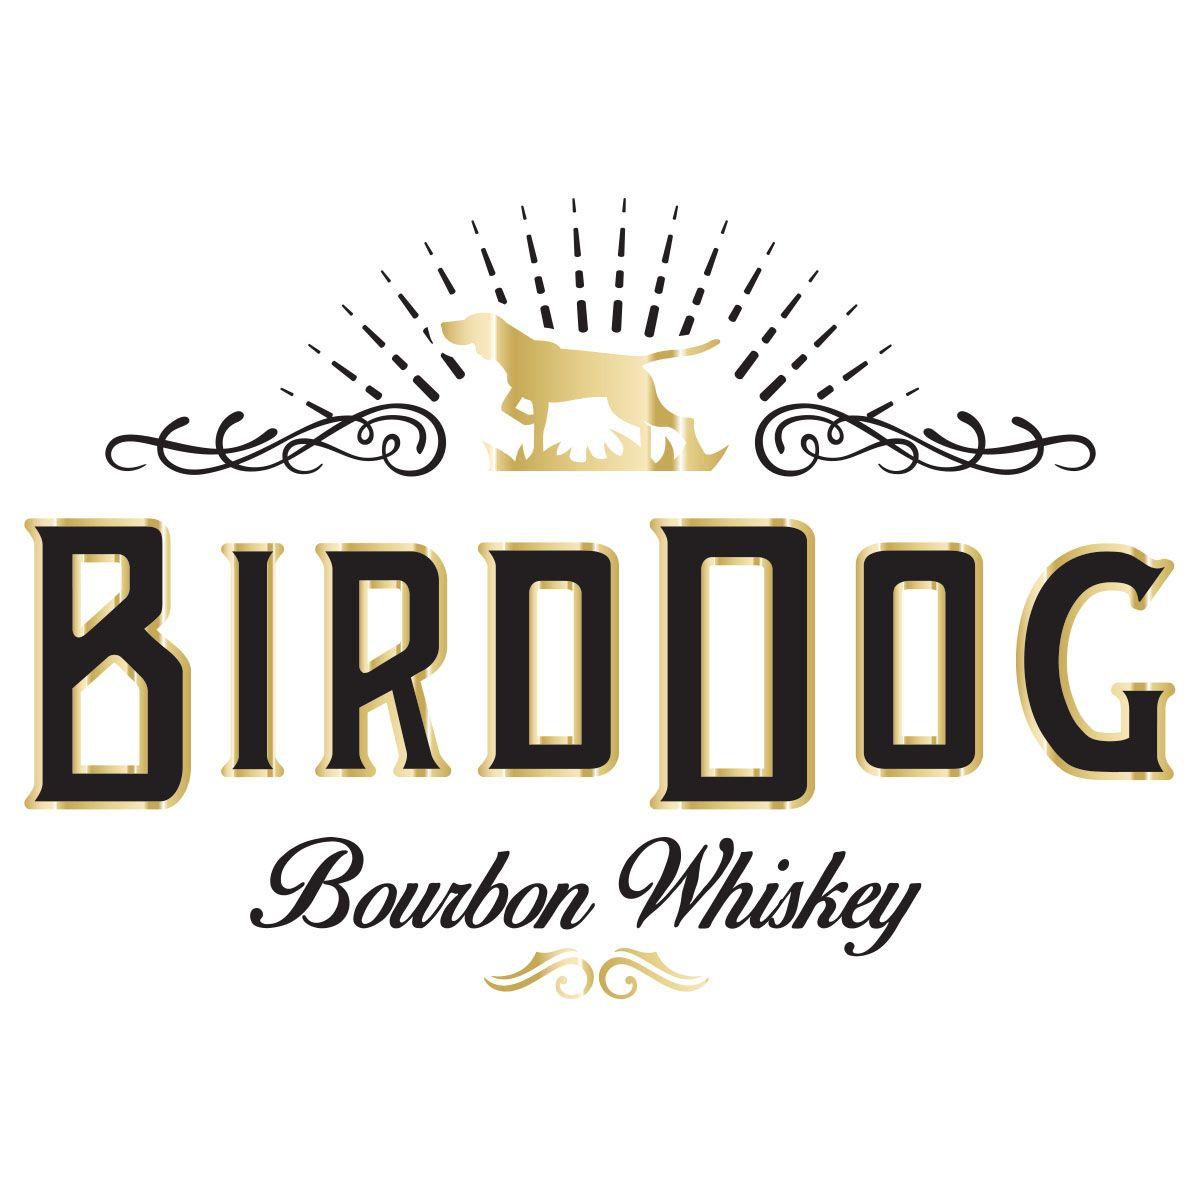 Bourbon Whiskey Logo - Bird Dog Bourbon Whiskey - Bowling Green Bourbon and Brewfest ...